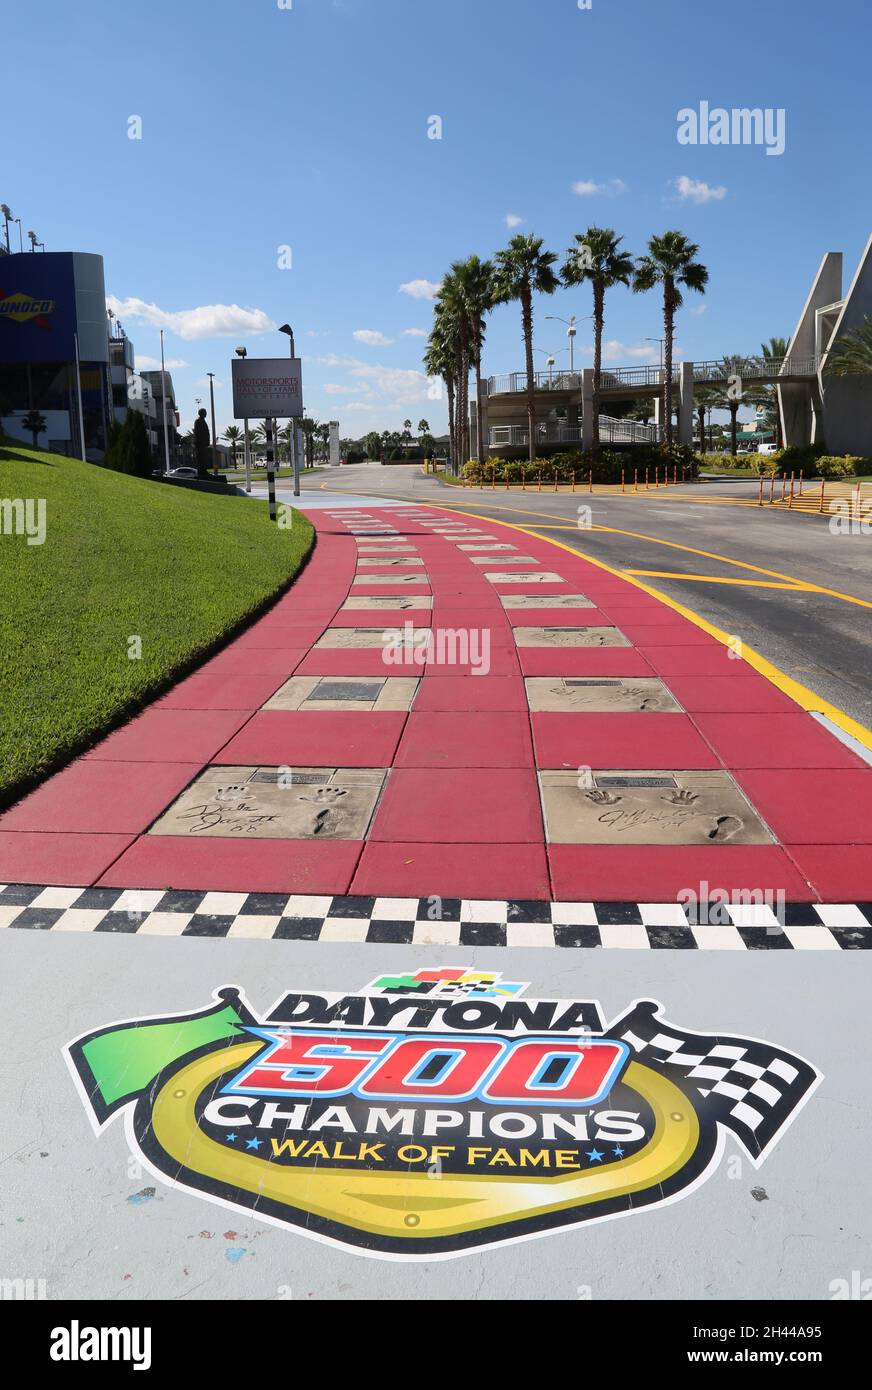 Daytona 500 Champions Walk of Fame at Daytona International Speedway, Daytona Beach, Florida Stock Photo